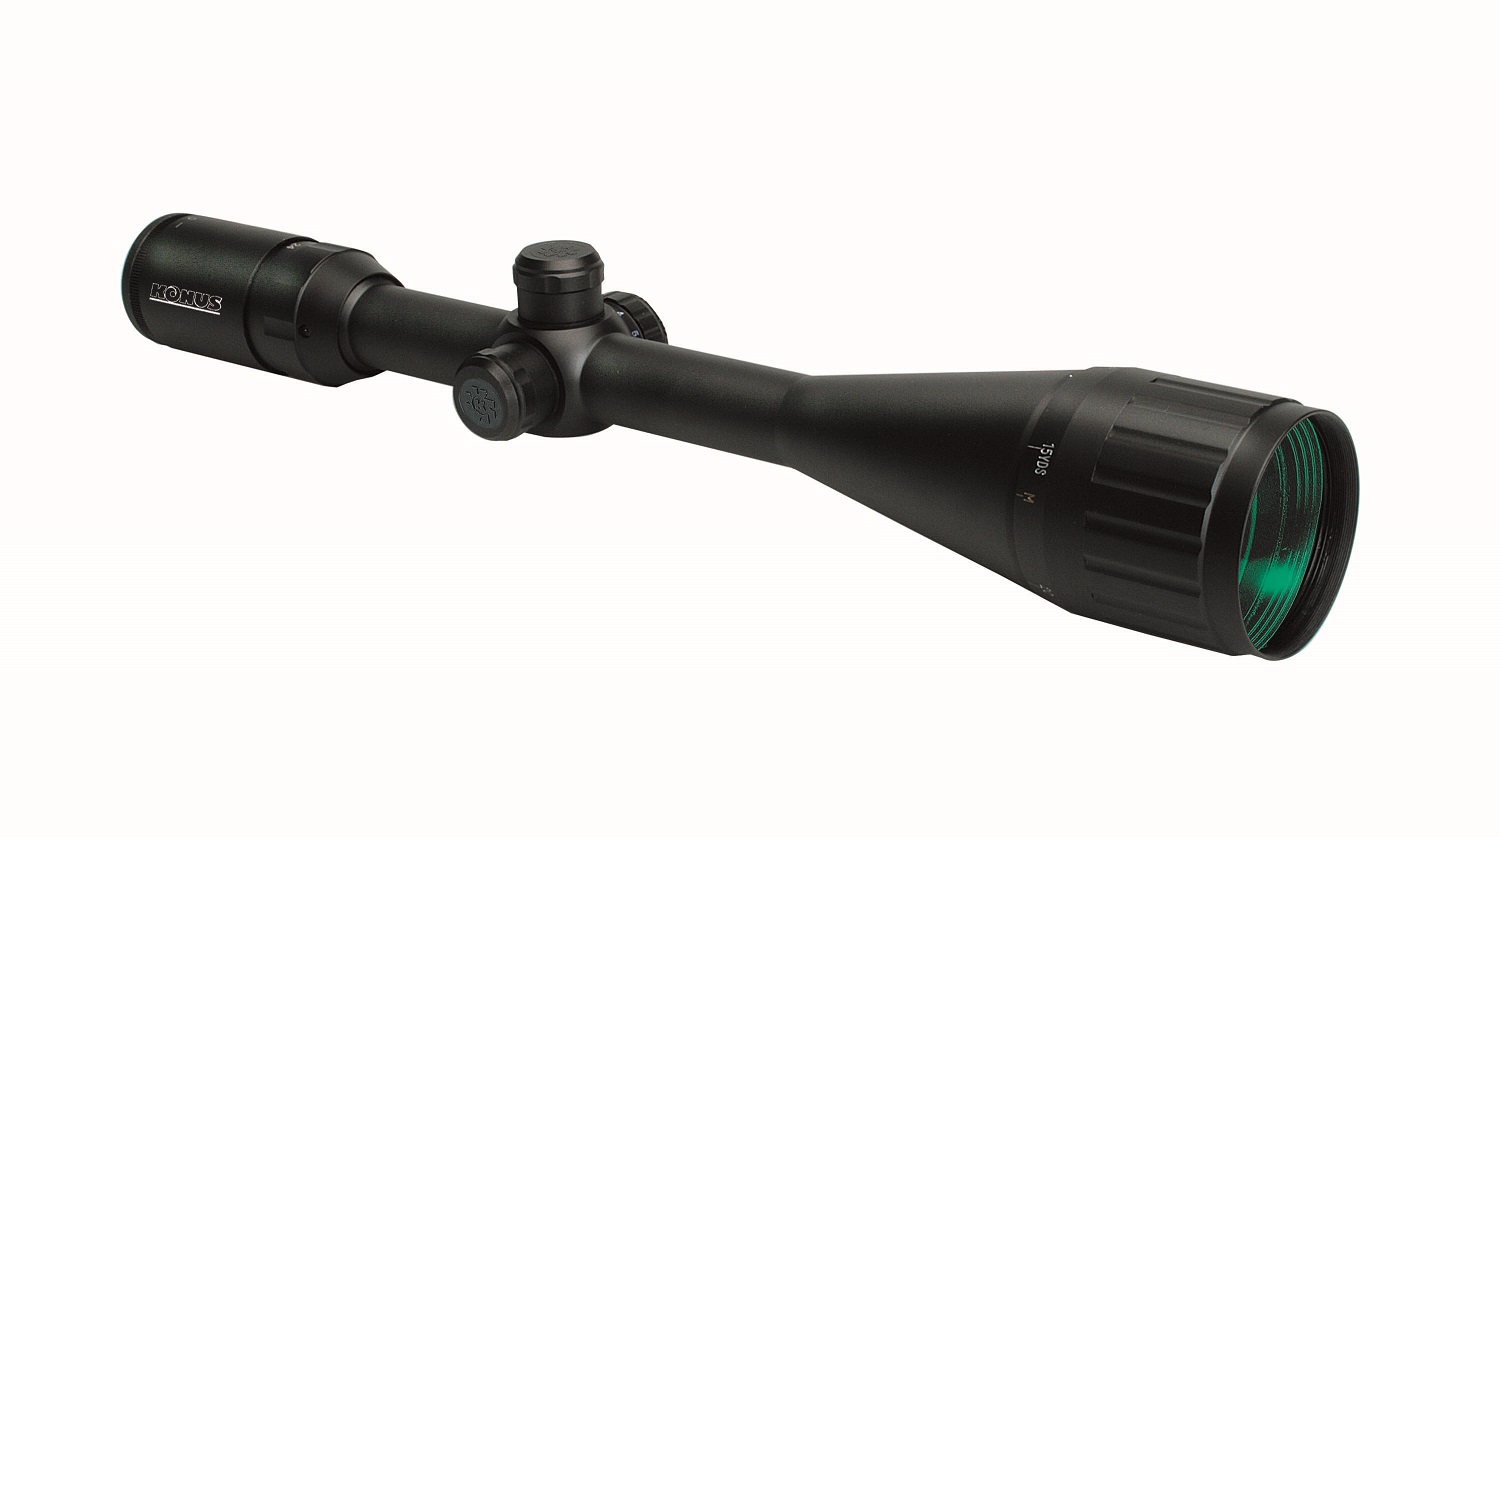 Konus 6X-24X50mm IR pro Plus Riflescope Illuminated Dot